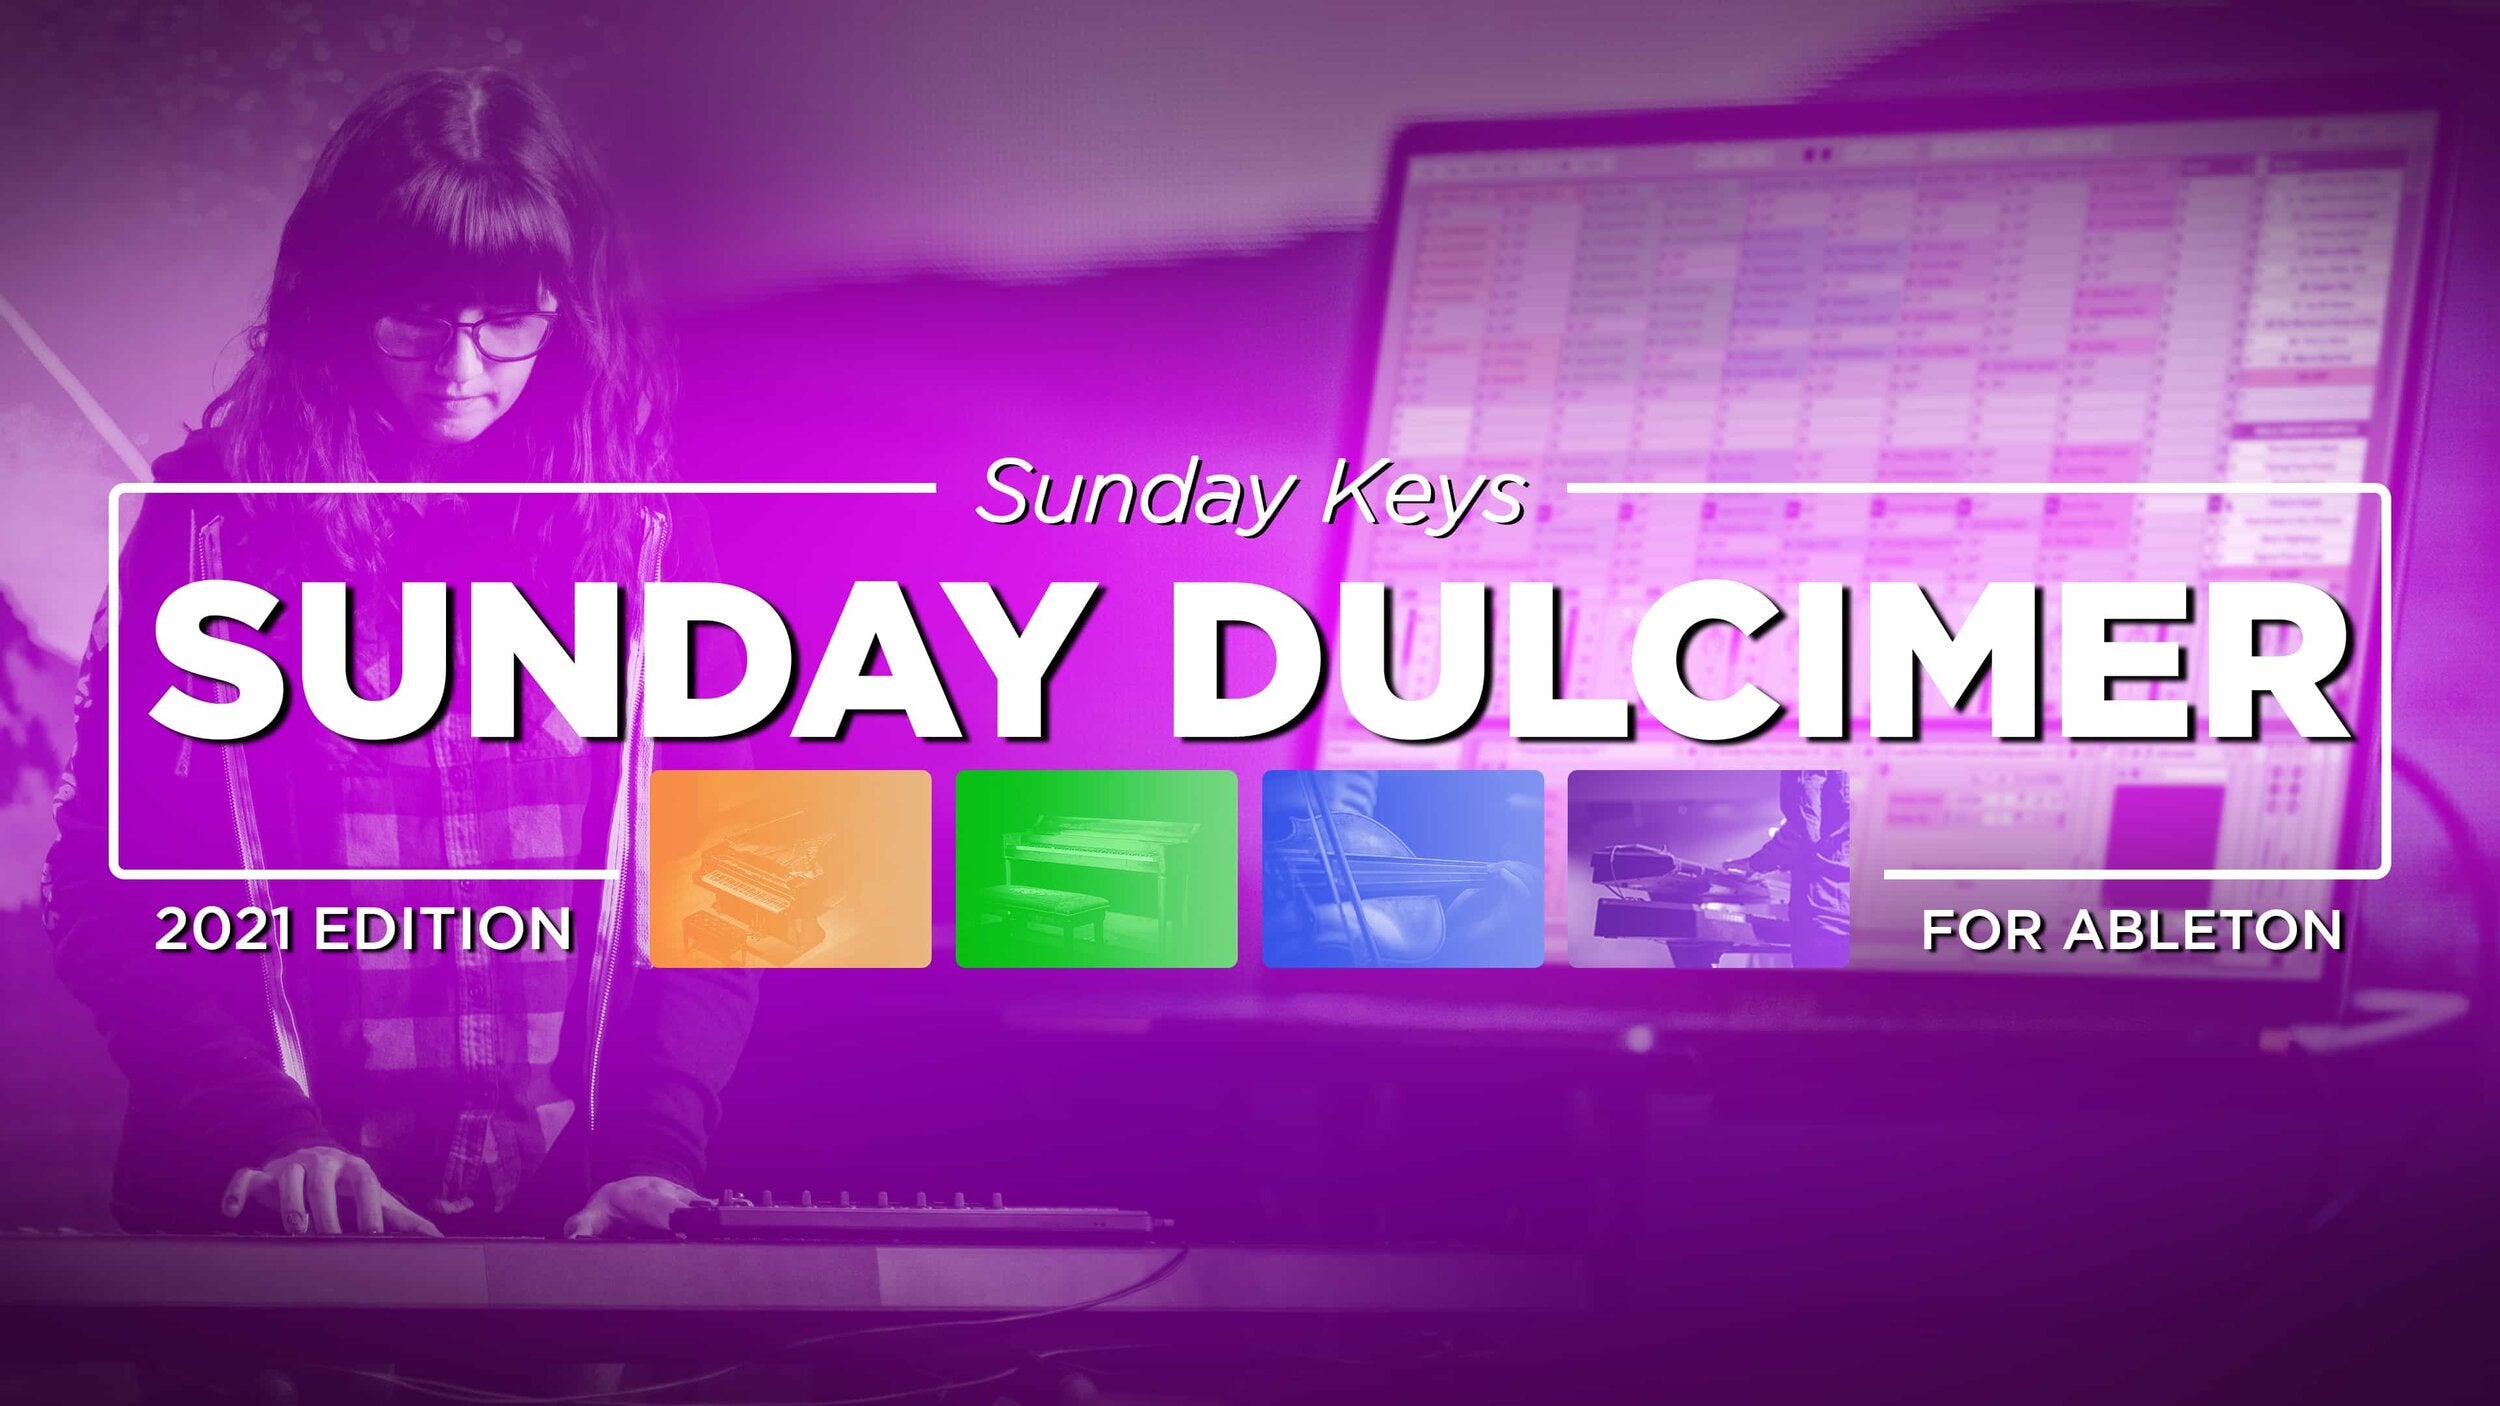 Sunday Dulcimer: Custom-Sampled Dulcimer for Worship - Sunday Keys for Ableton 2021